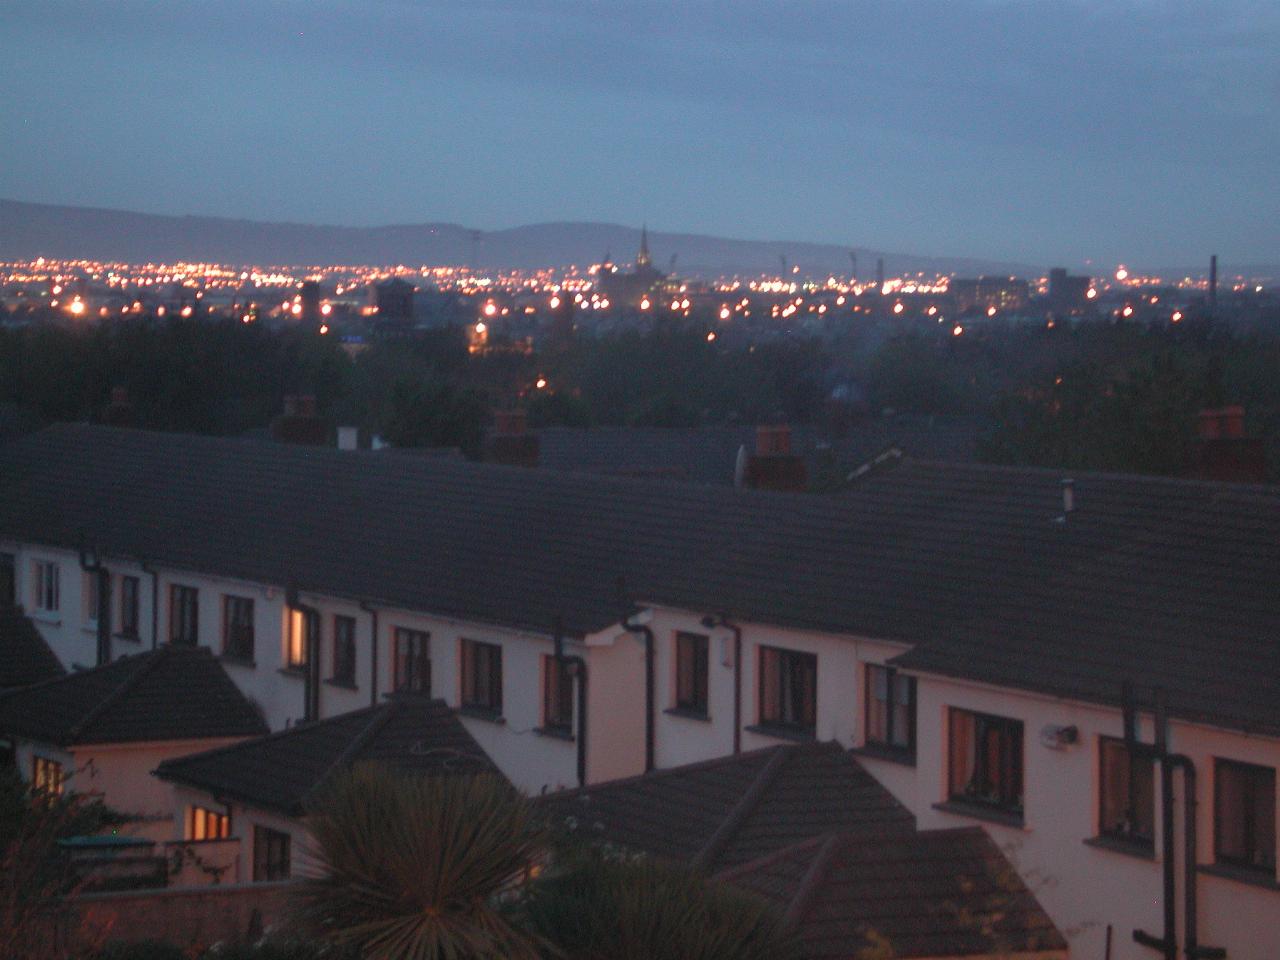 Sunset over Dublin - not very clear